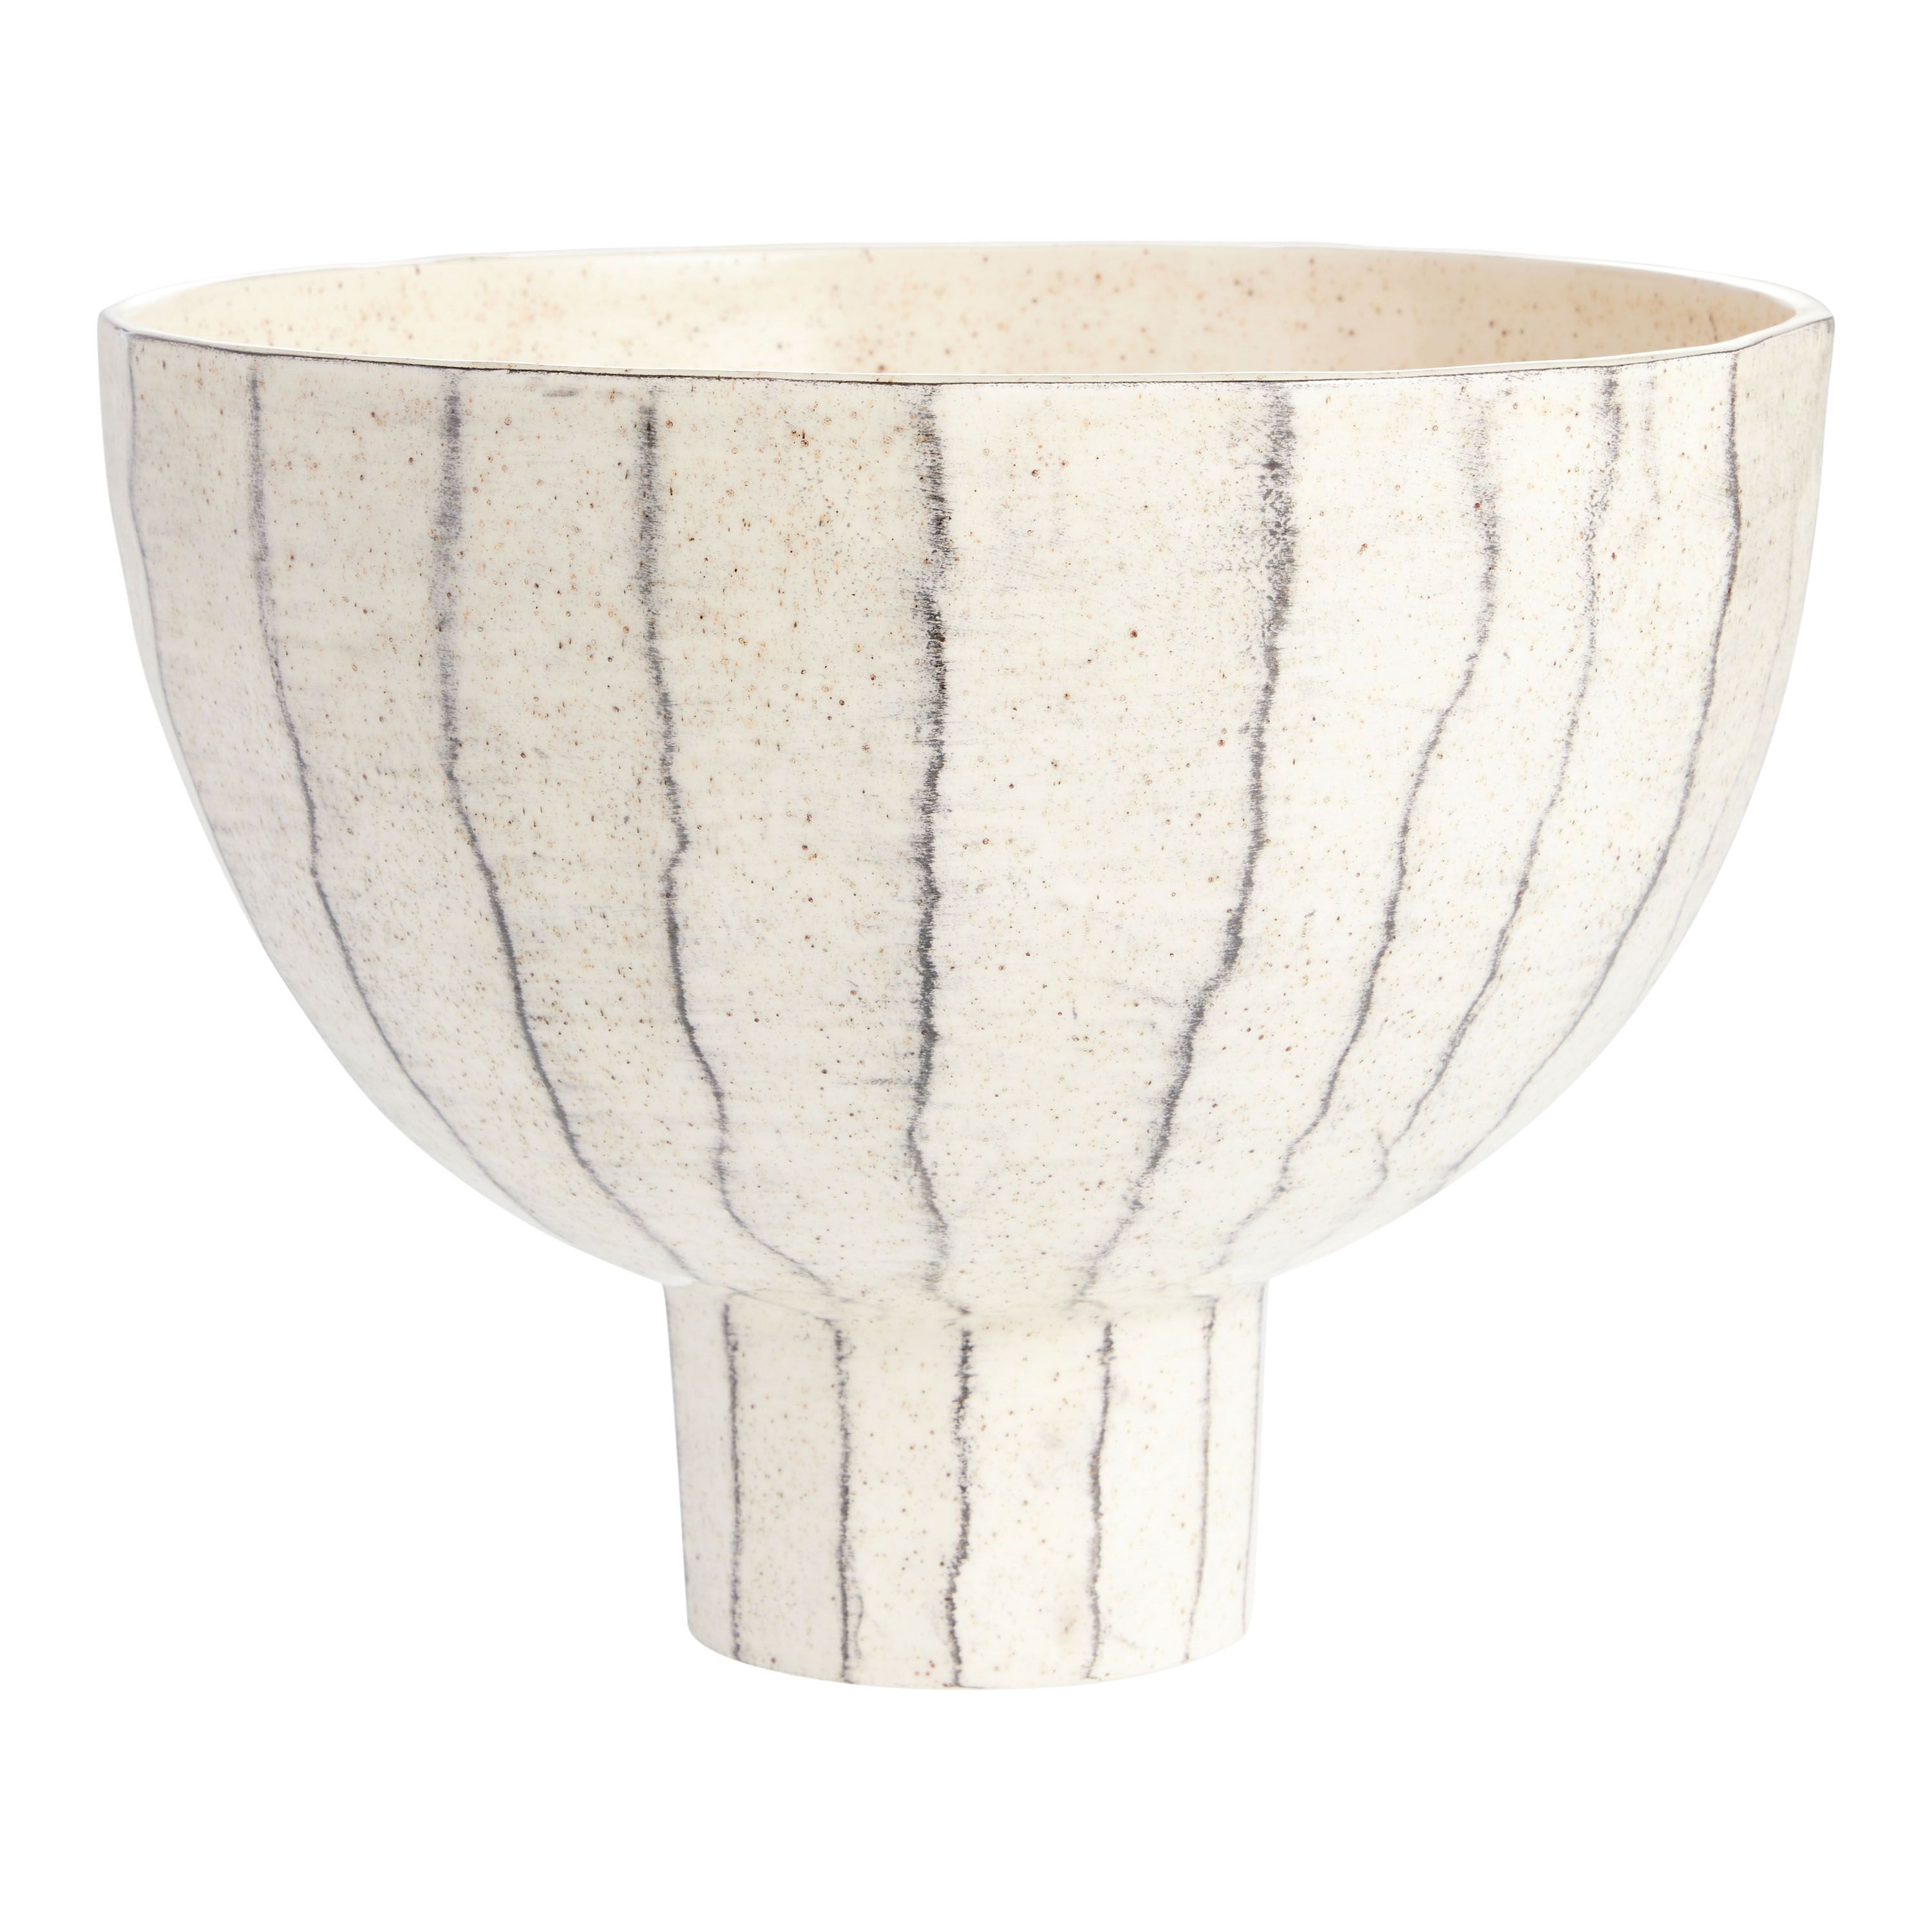 CRAFT Catarina Ivory And Charcoal Ceramic Striped Bowl | World Market